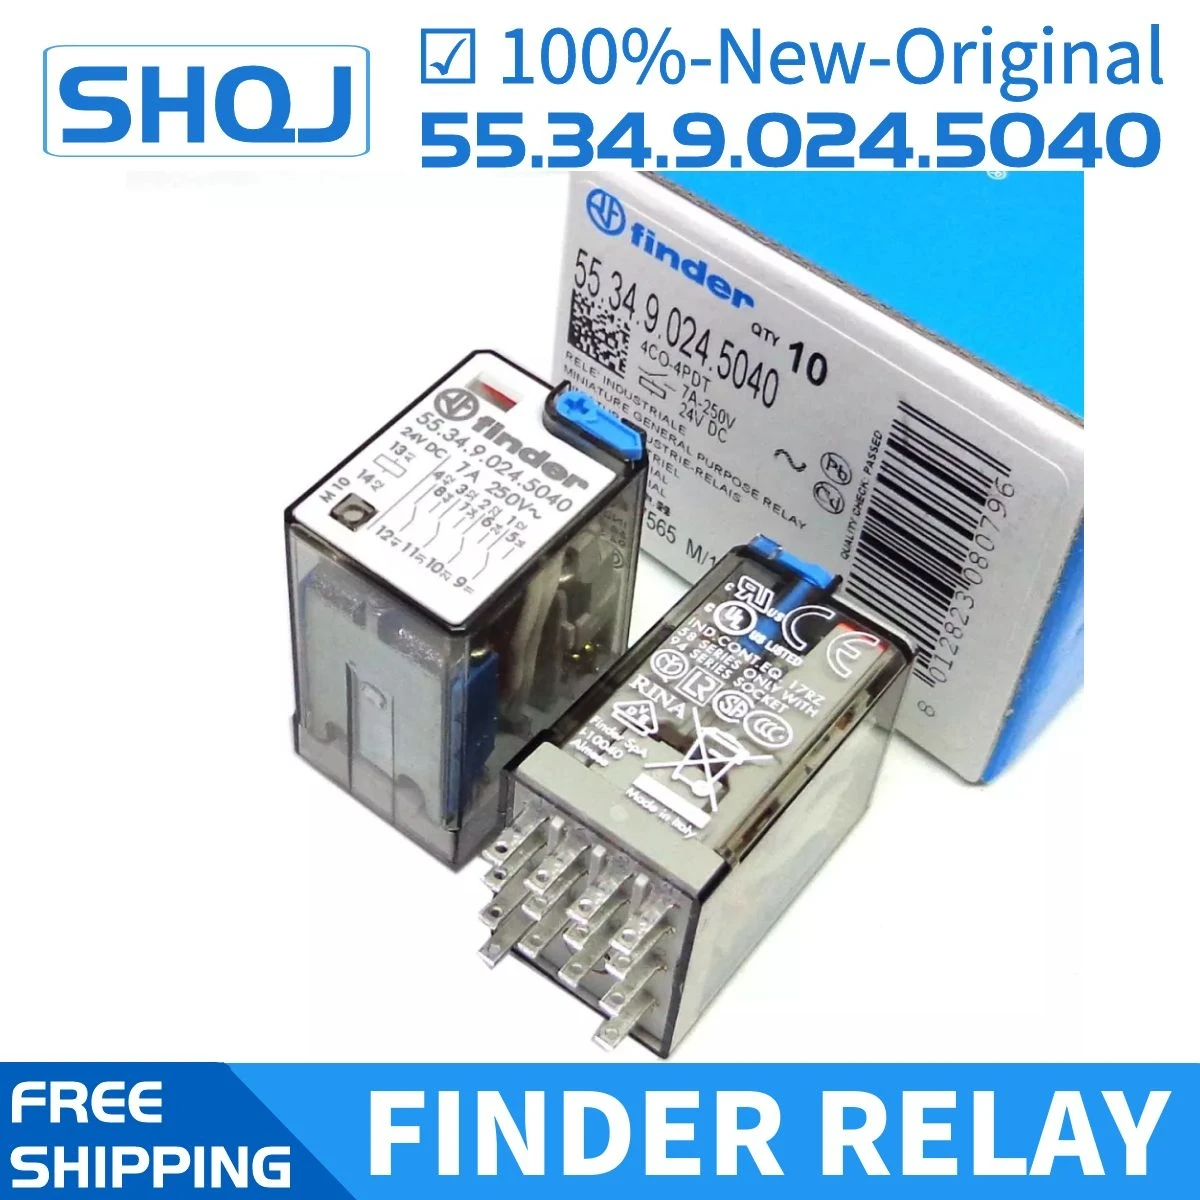 

finder relay 55.34.9.024.5040 24VDC 4CO 14PIN 7A 100%-new-original